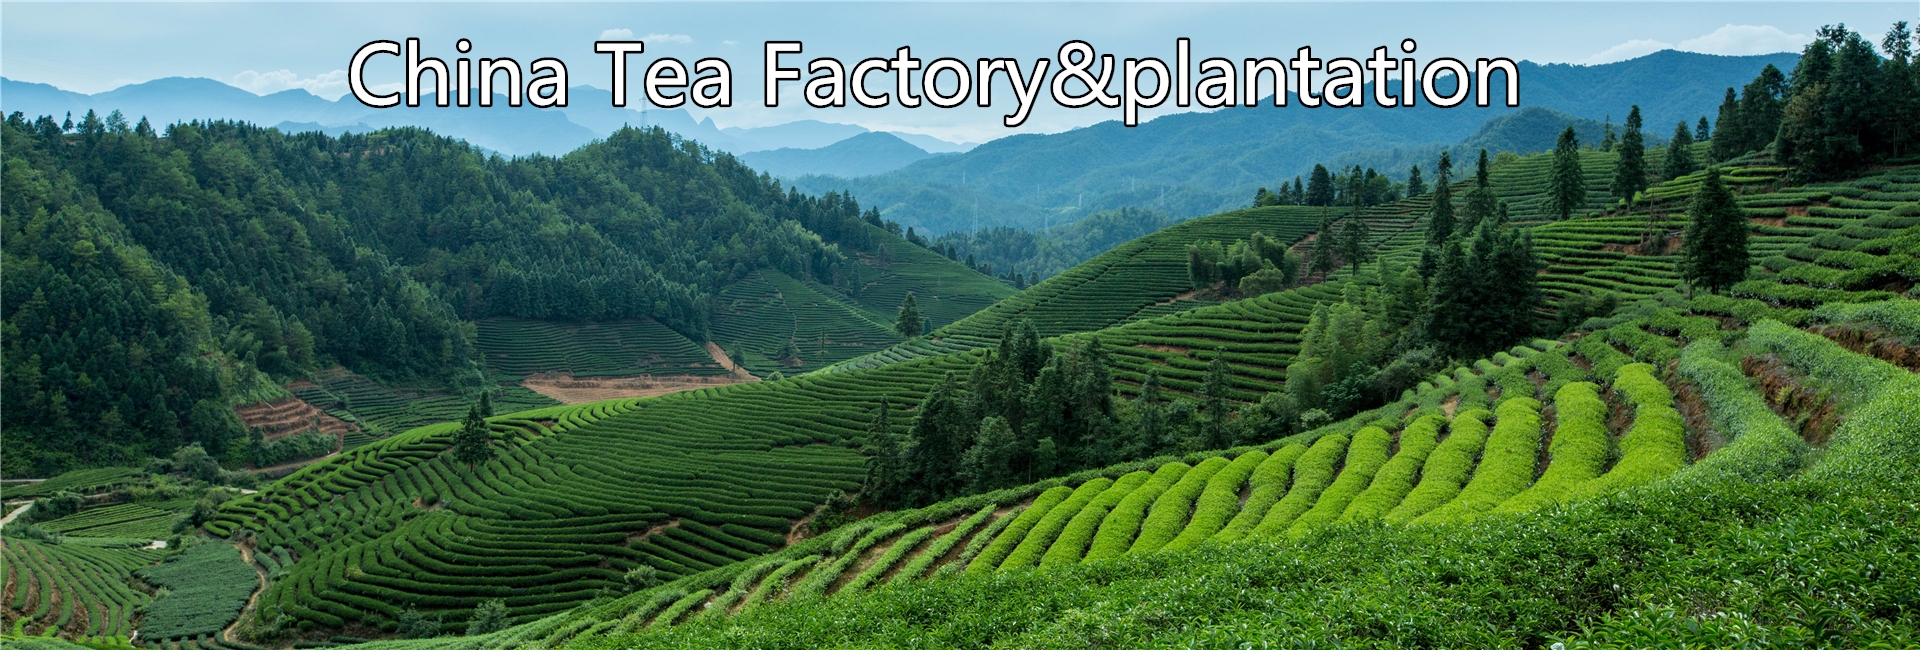 tea plantation-banner1